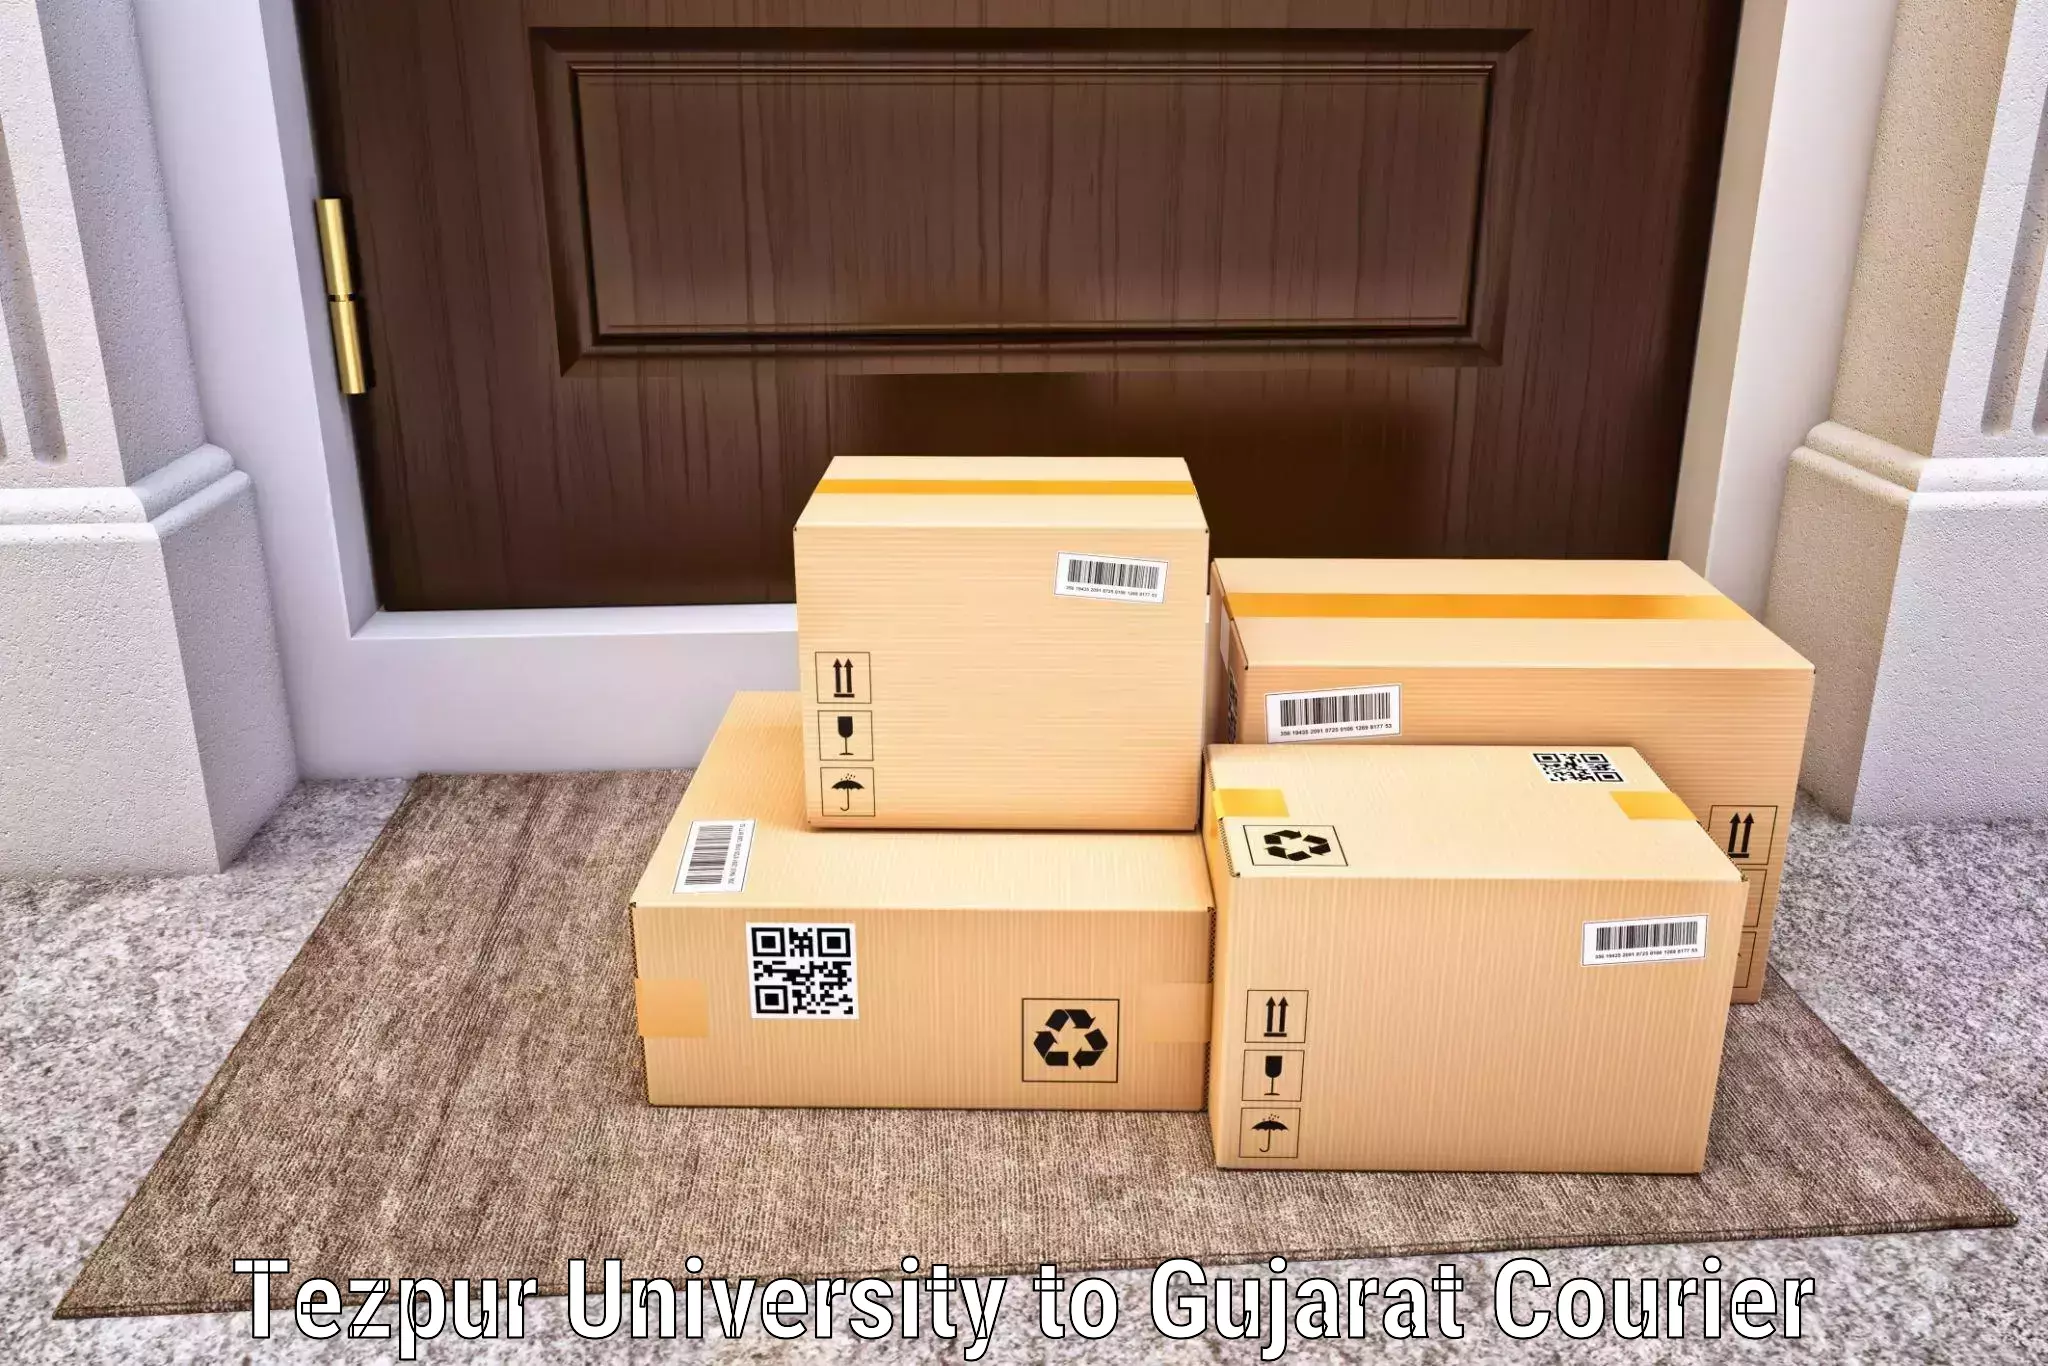 Bulk shipment in Tezpur University to Gujarat